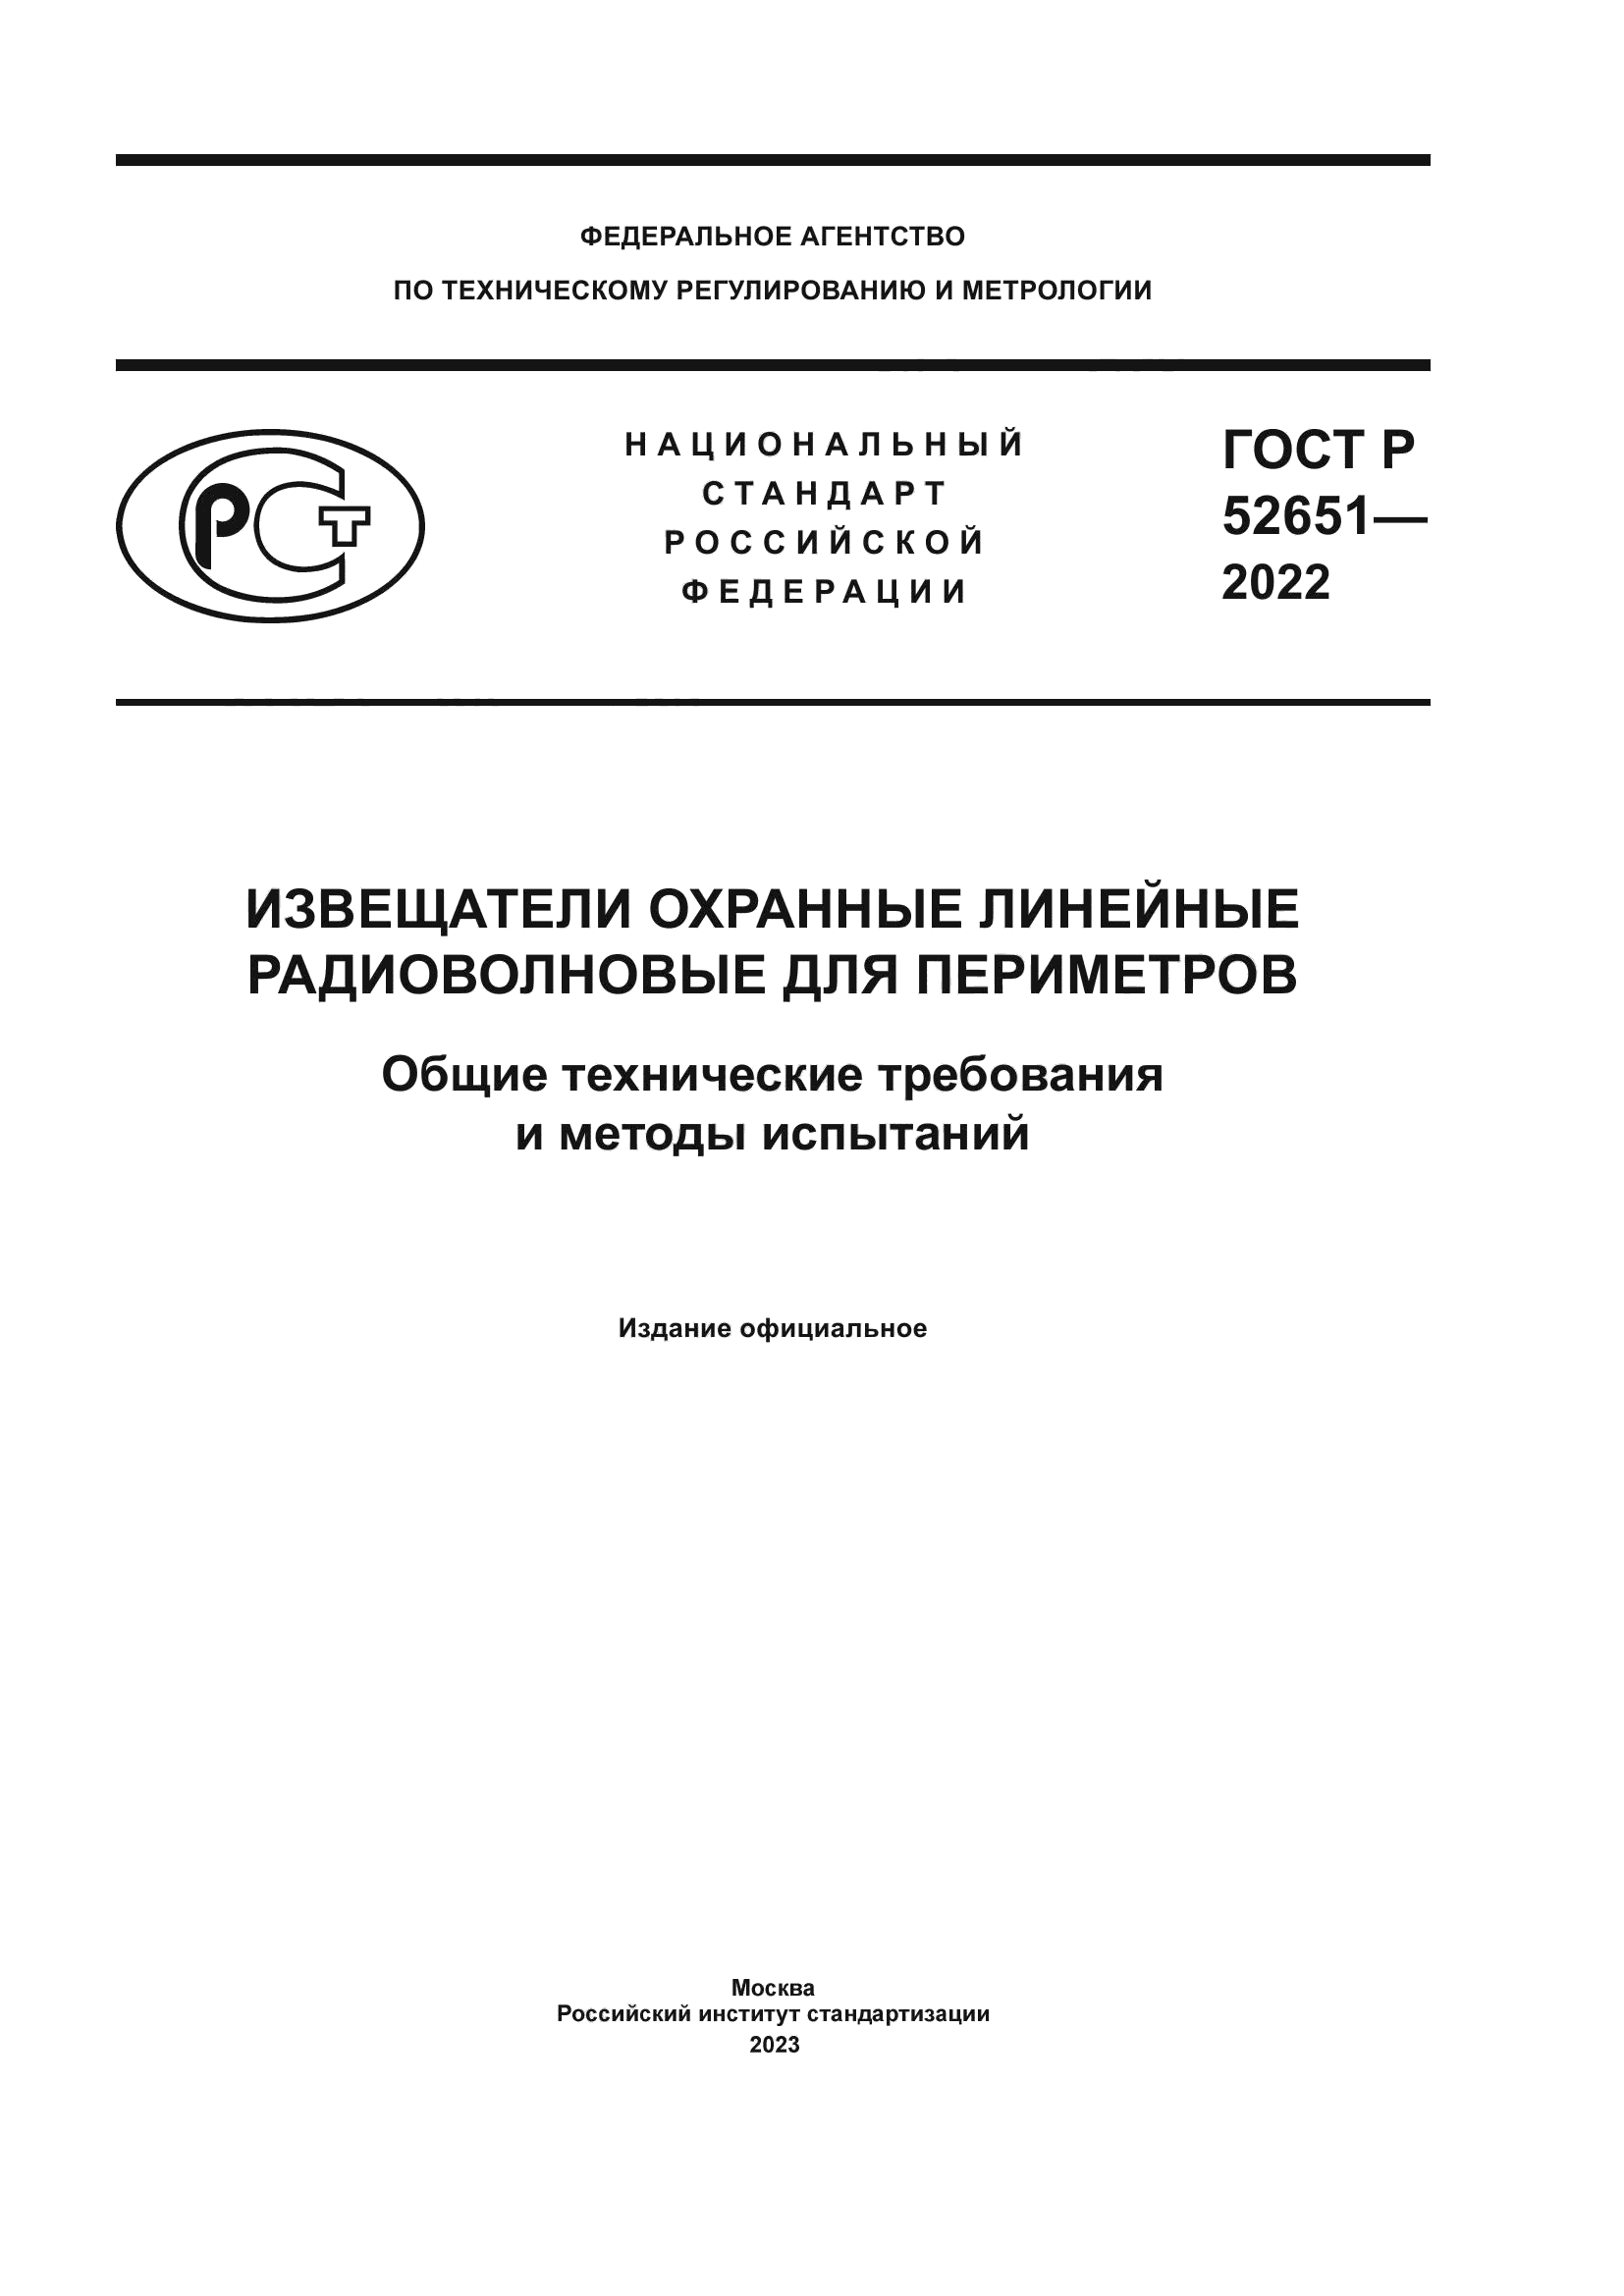 ГОСТ Р 52651-2022